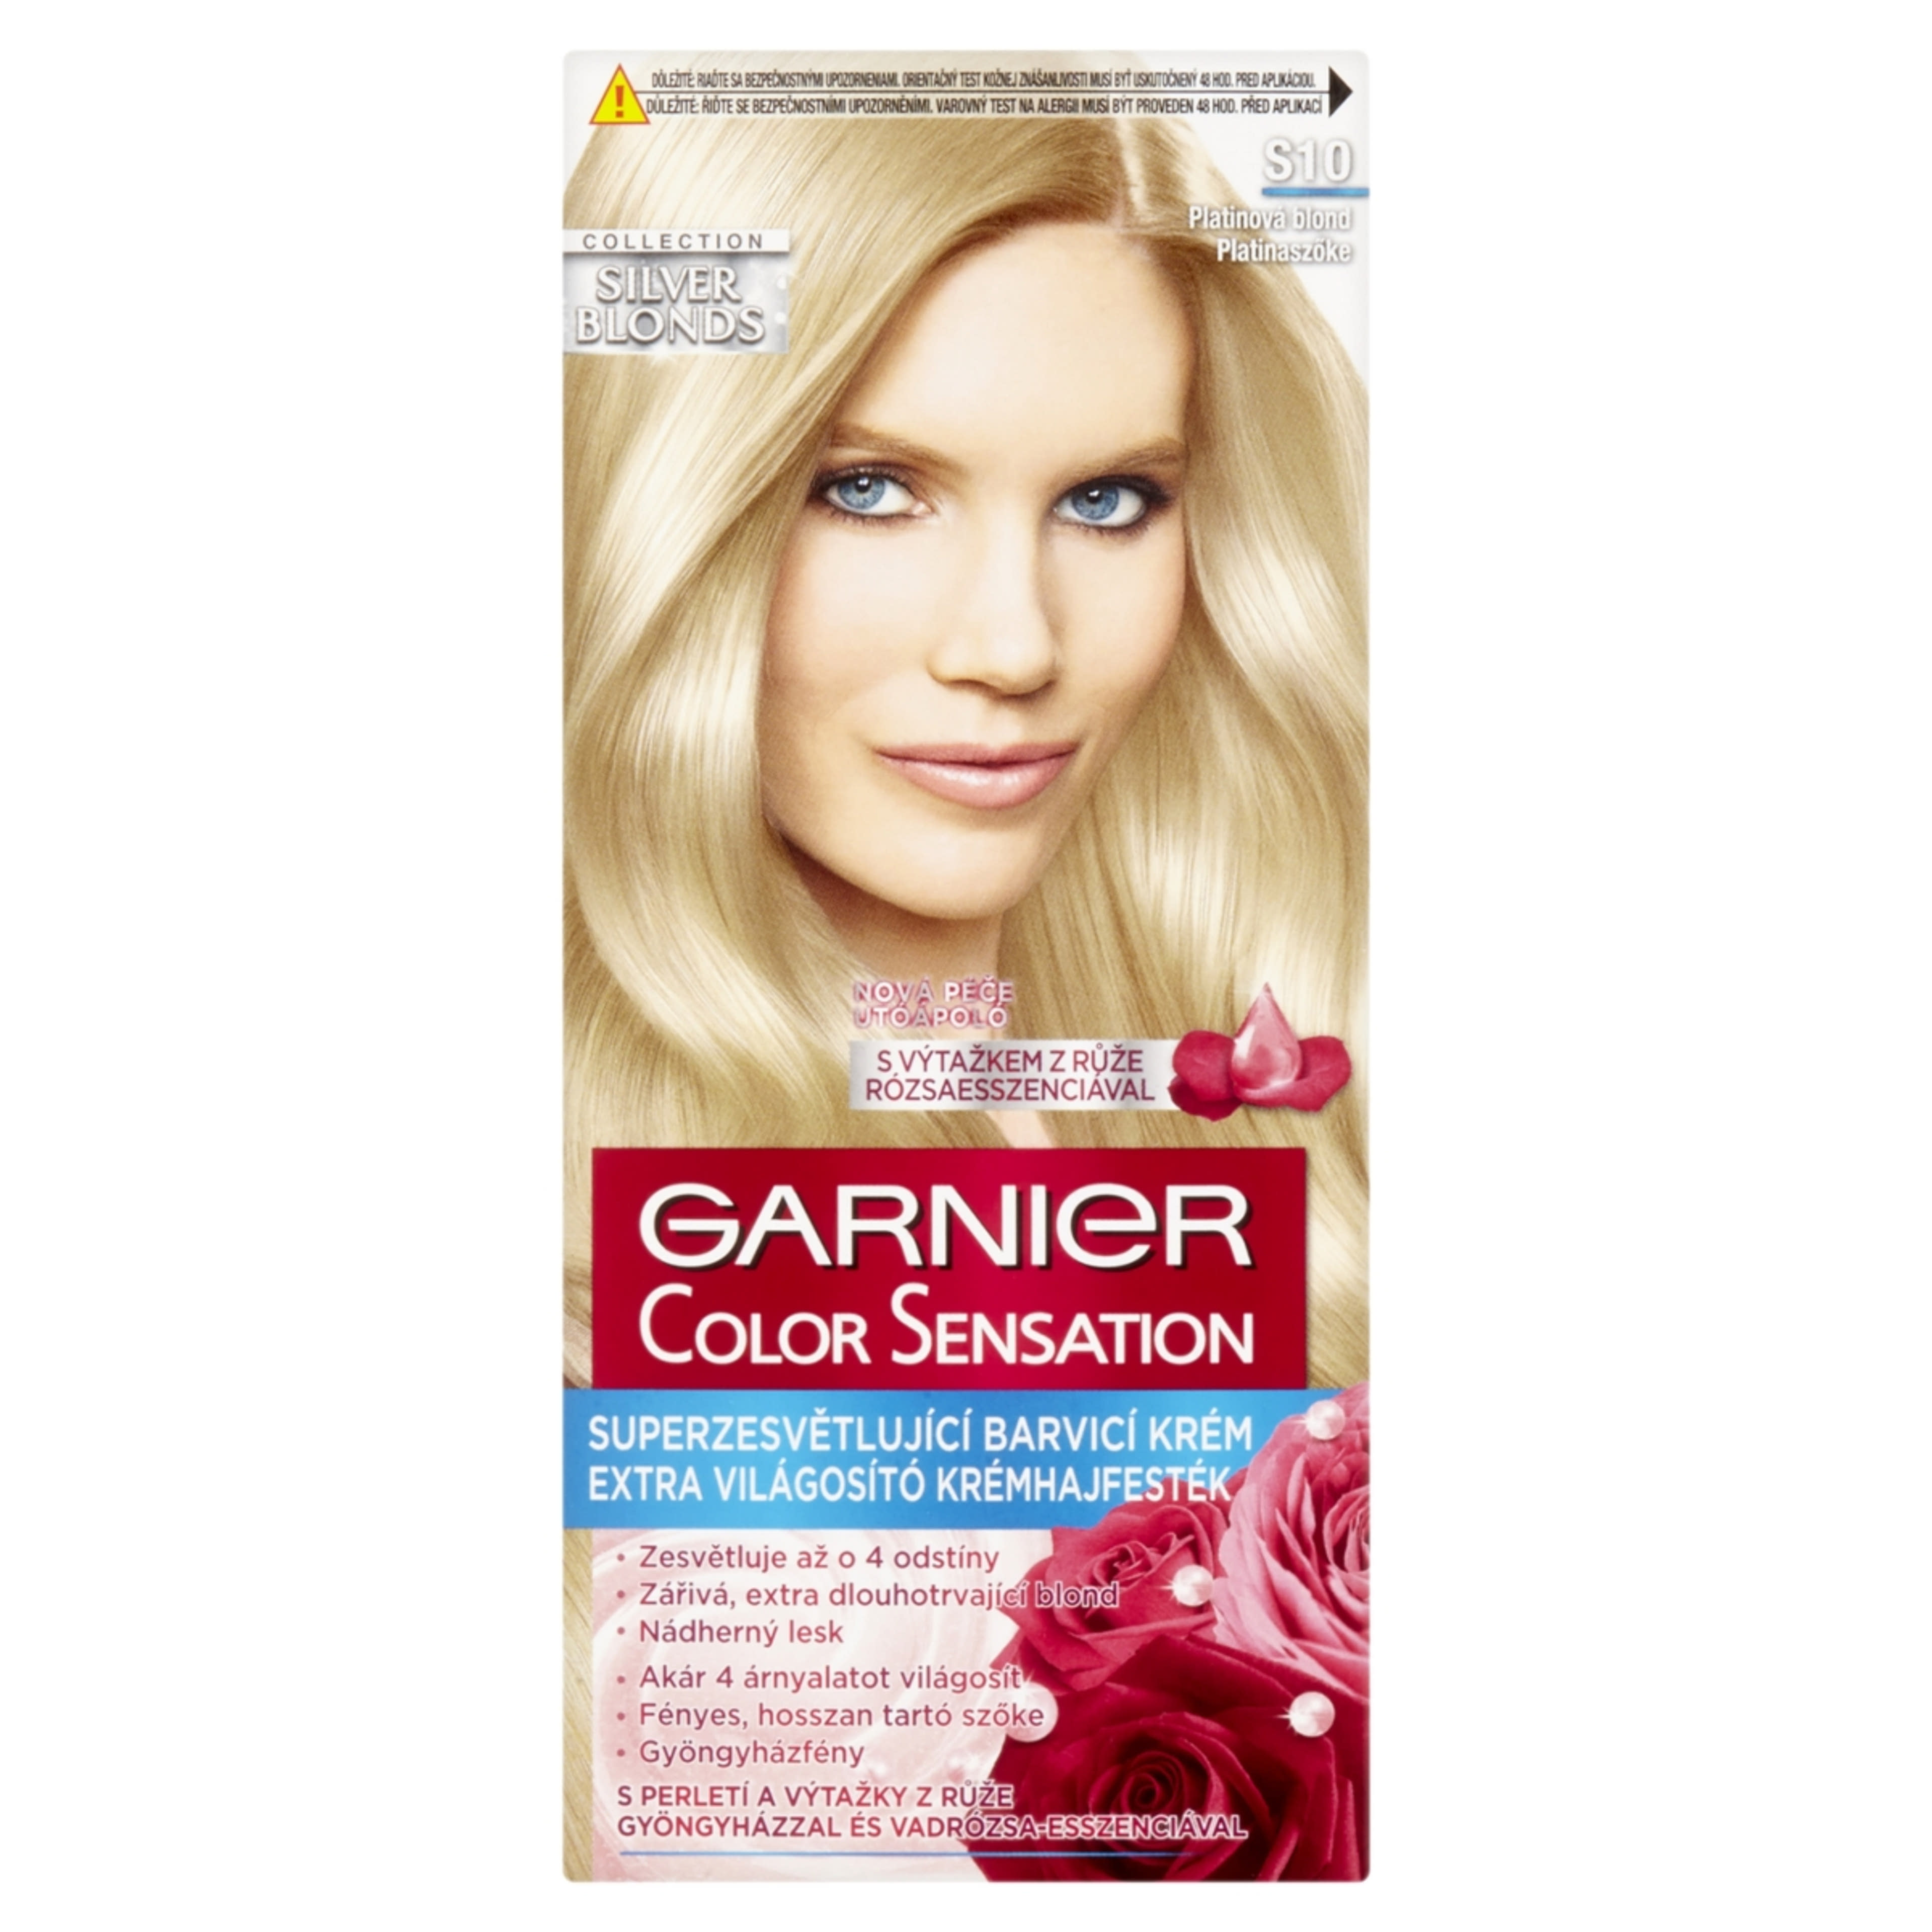 Garnier Color Sensation hajfesték S10 Platinaszőke - 1 db-1